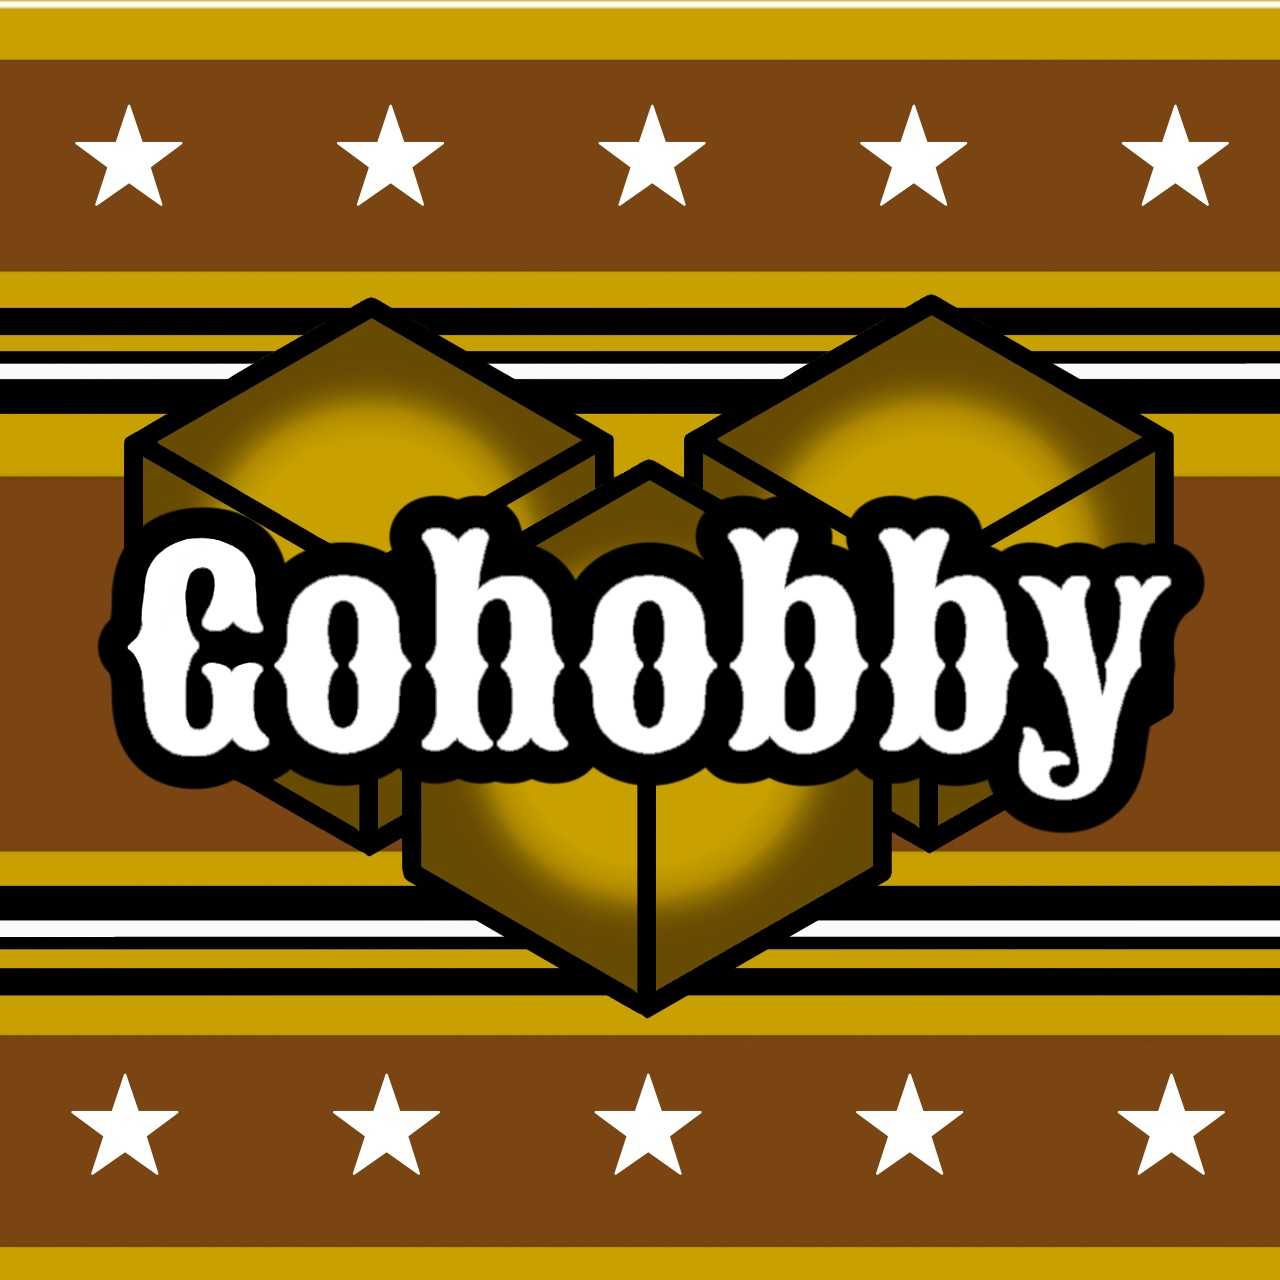 Gohobby